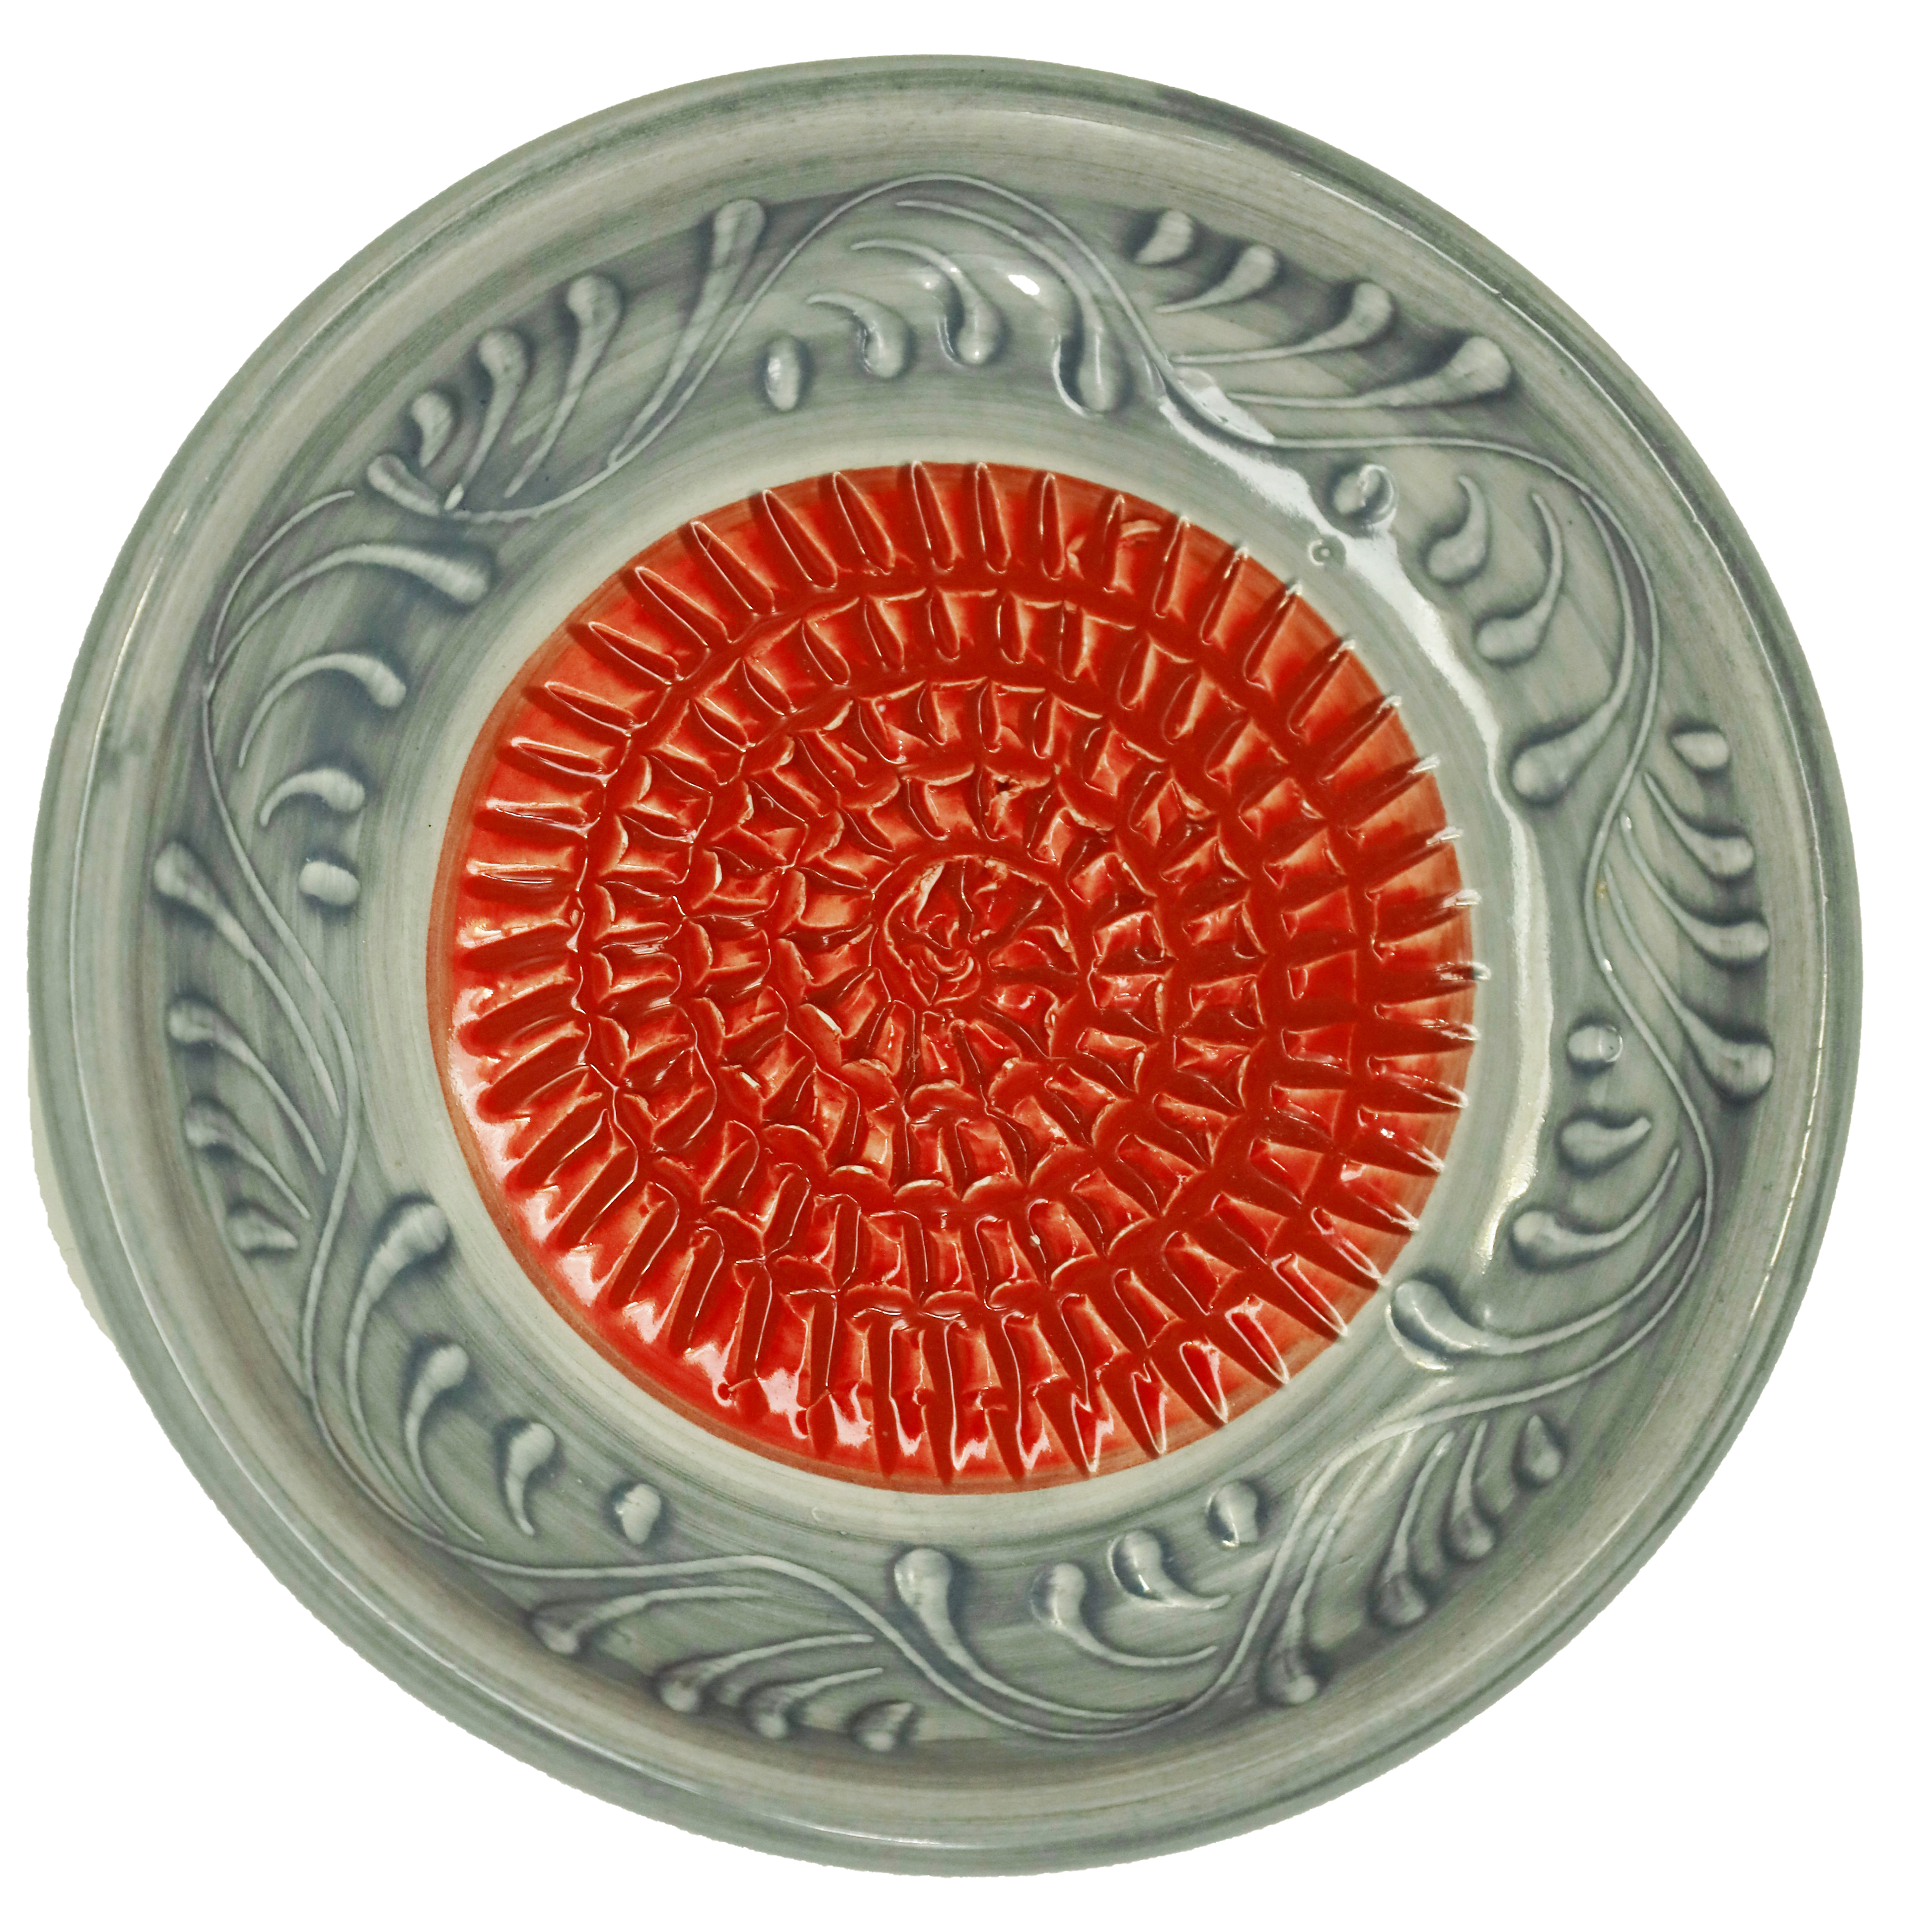 Keramikreibe in Rot-Grau für Ingwer-Knoblauch-Käse-Nüsse-Muskat-Parmesan-Schokolade uvm.  